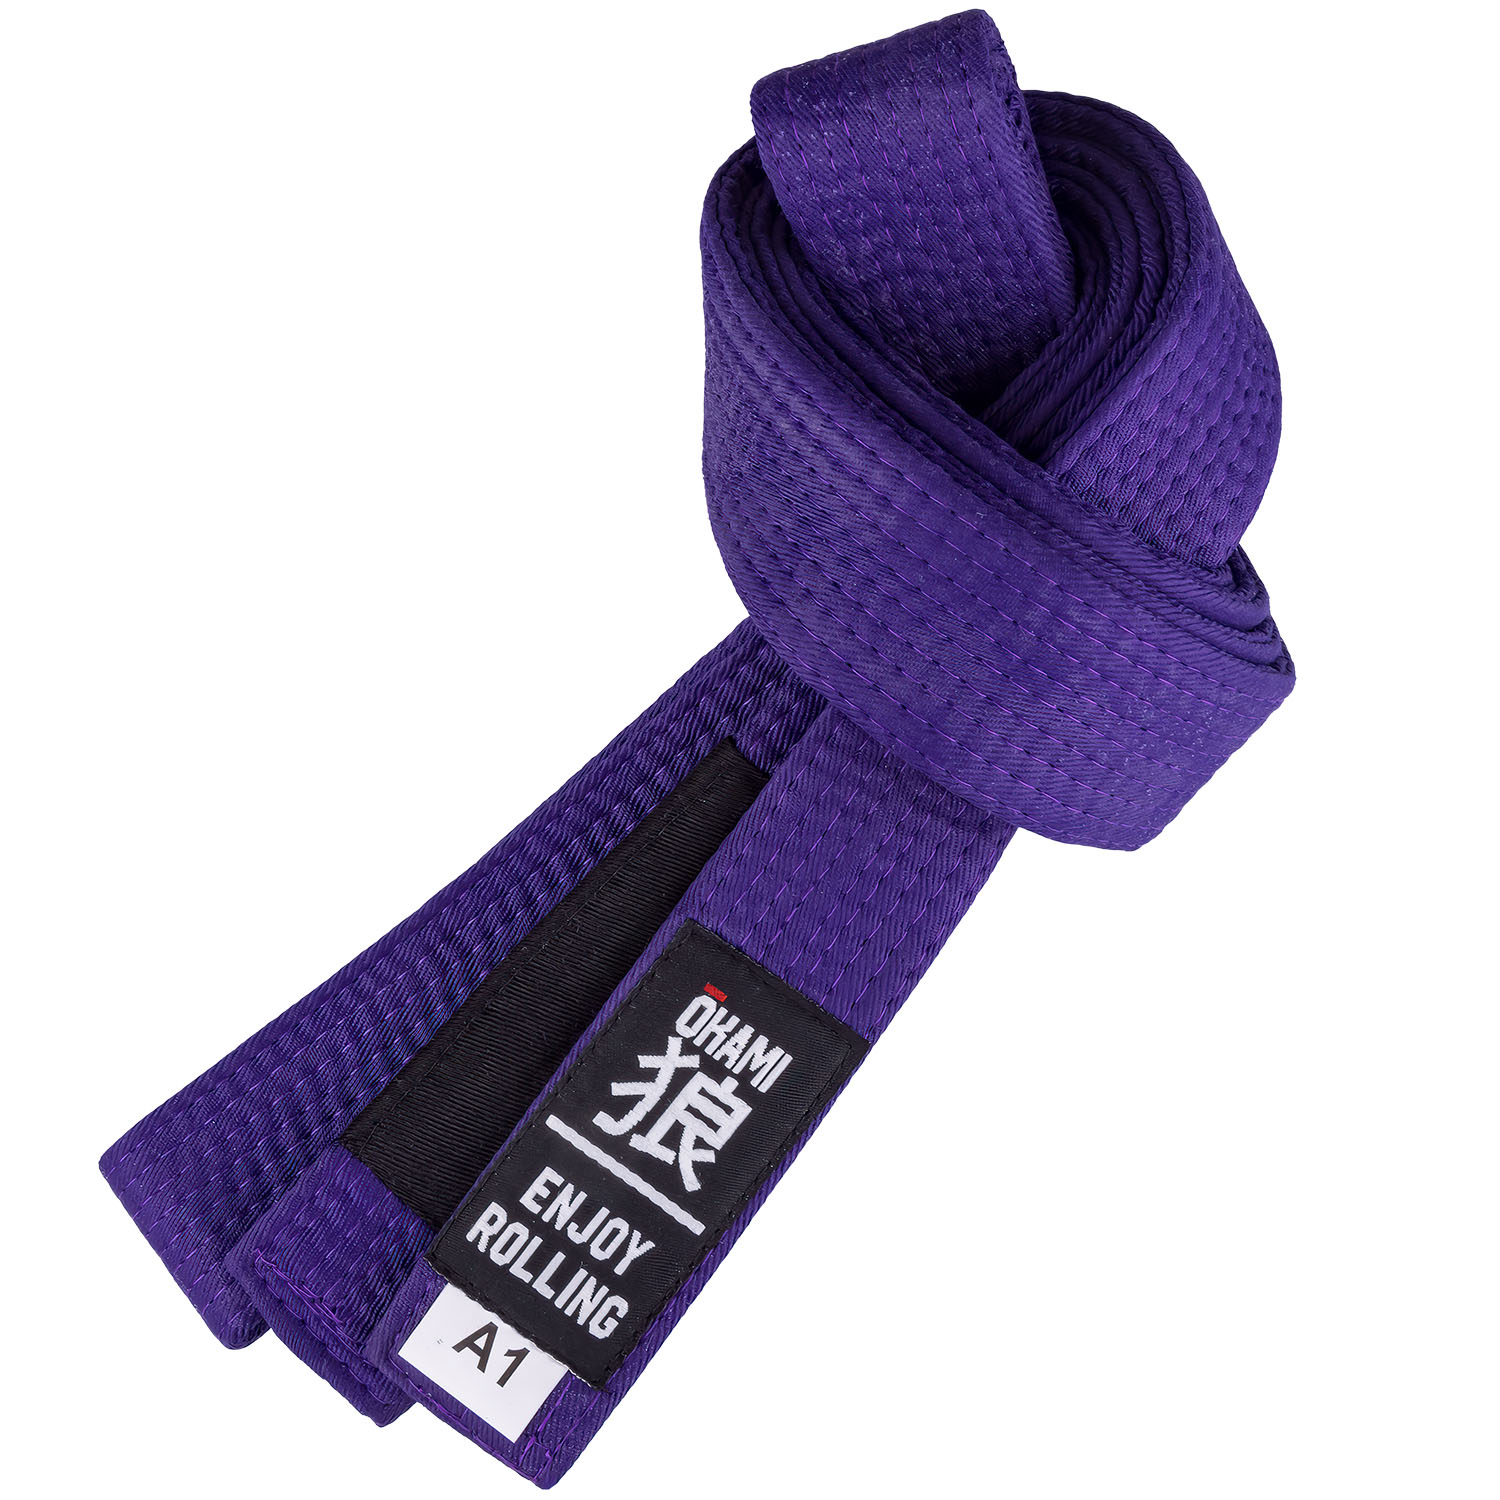 OKAMI BJJ Belt, Luta Livre, purple, A4